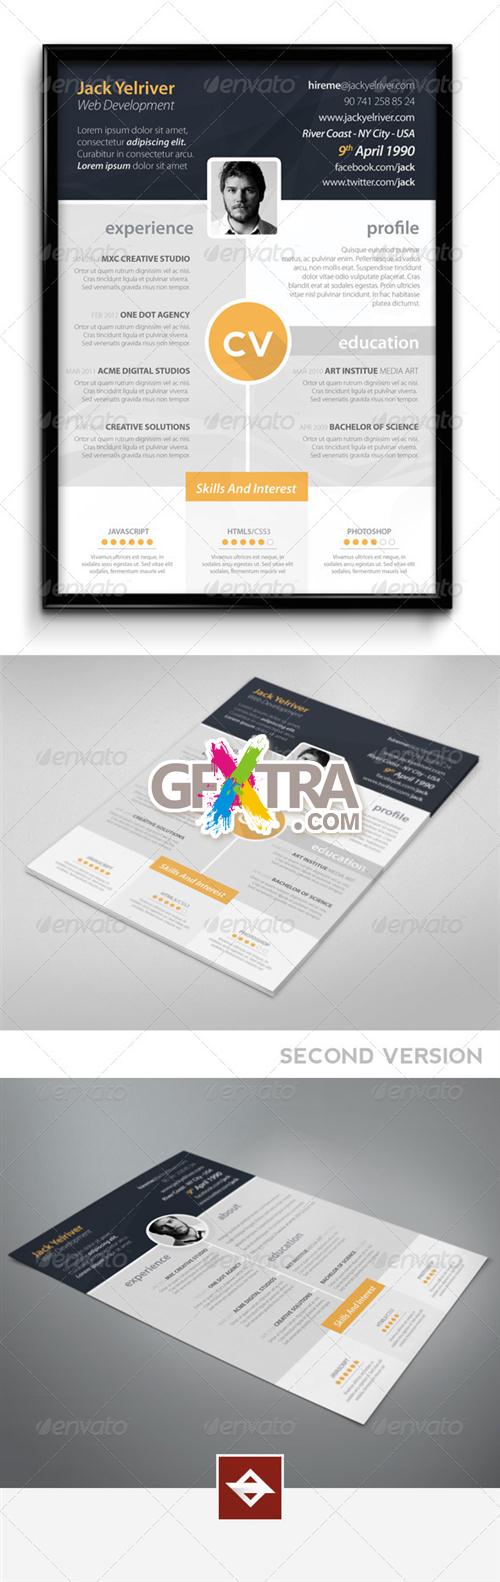 GraphicRiver - Premium CV